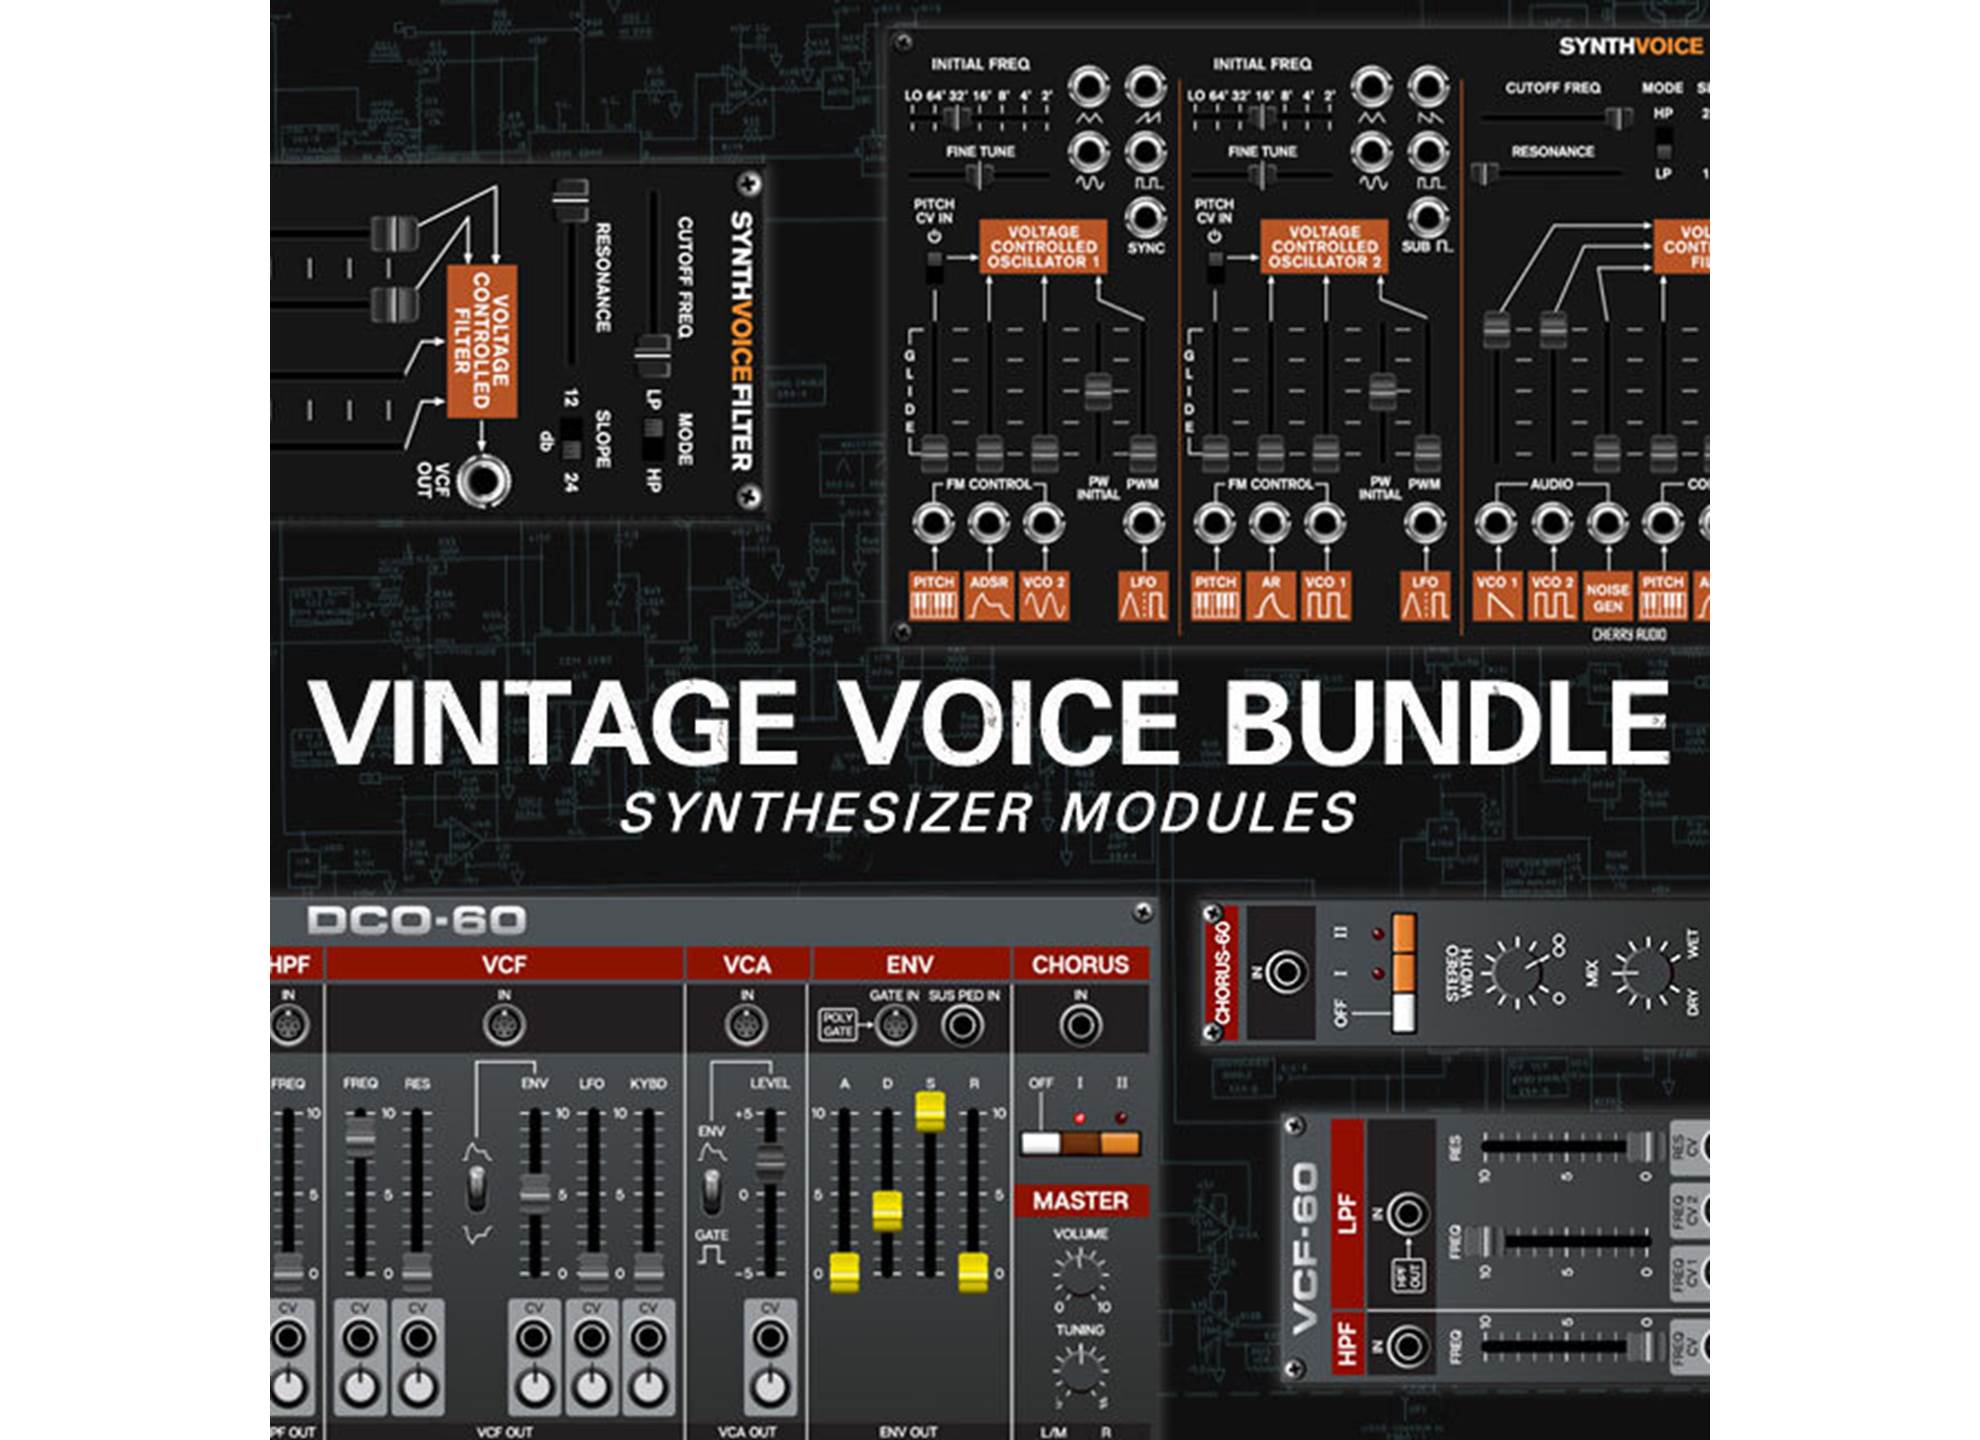 Voltage Modular Vintage Voice Bundle